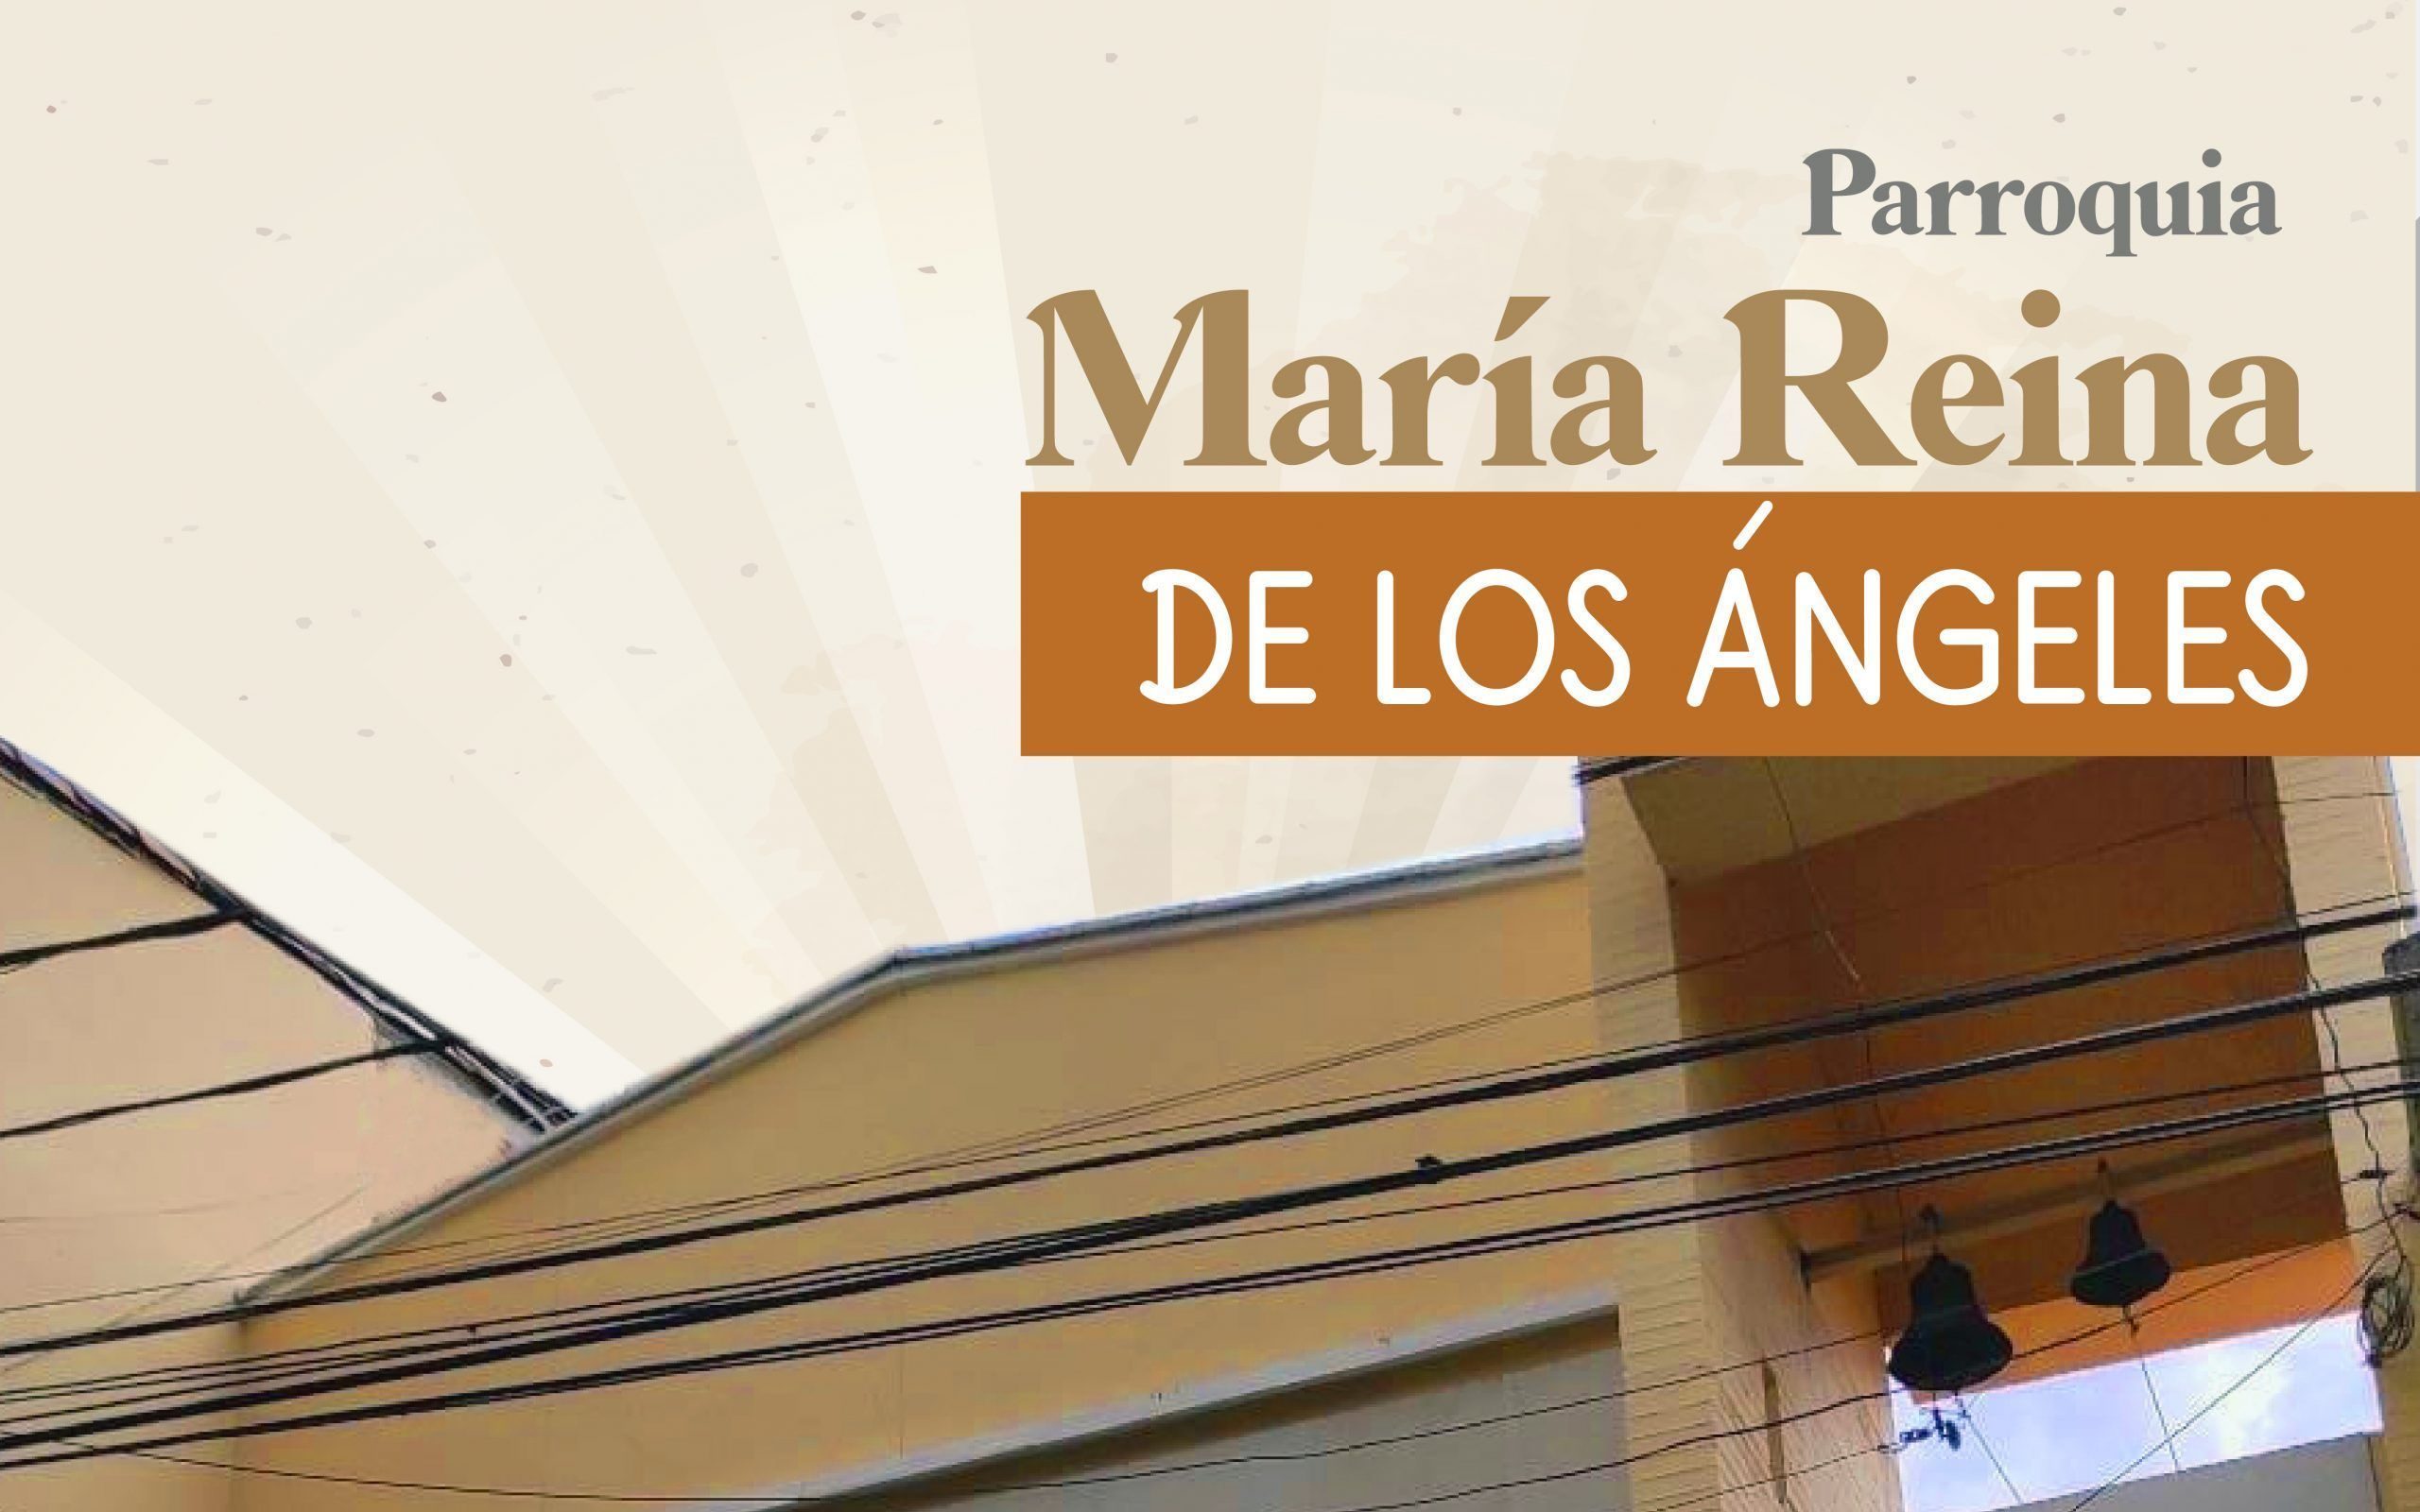 Parroquia Maria Reina de los Angeles